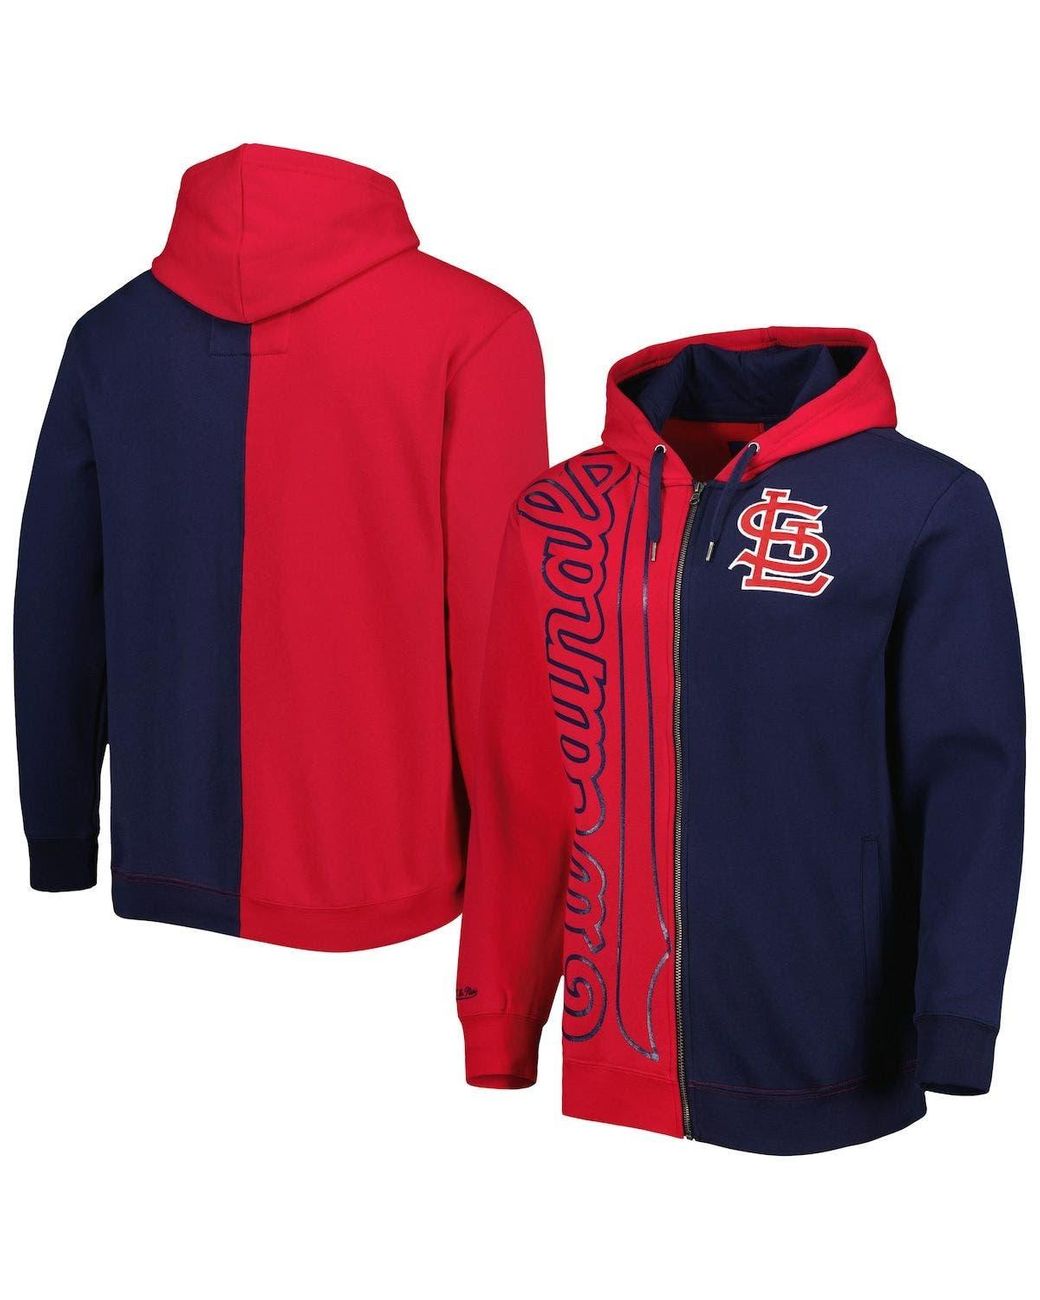 Men's Mitchell & Ness Red/Royal Atlanta Braves Fleece Full-Zip Hoodie Size: Small